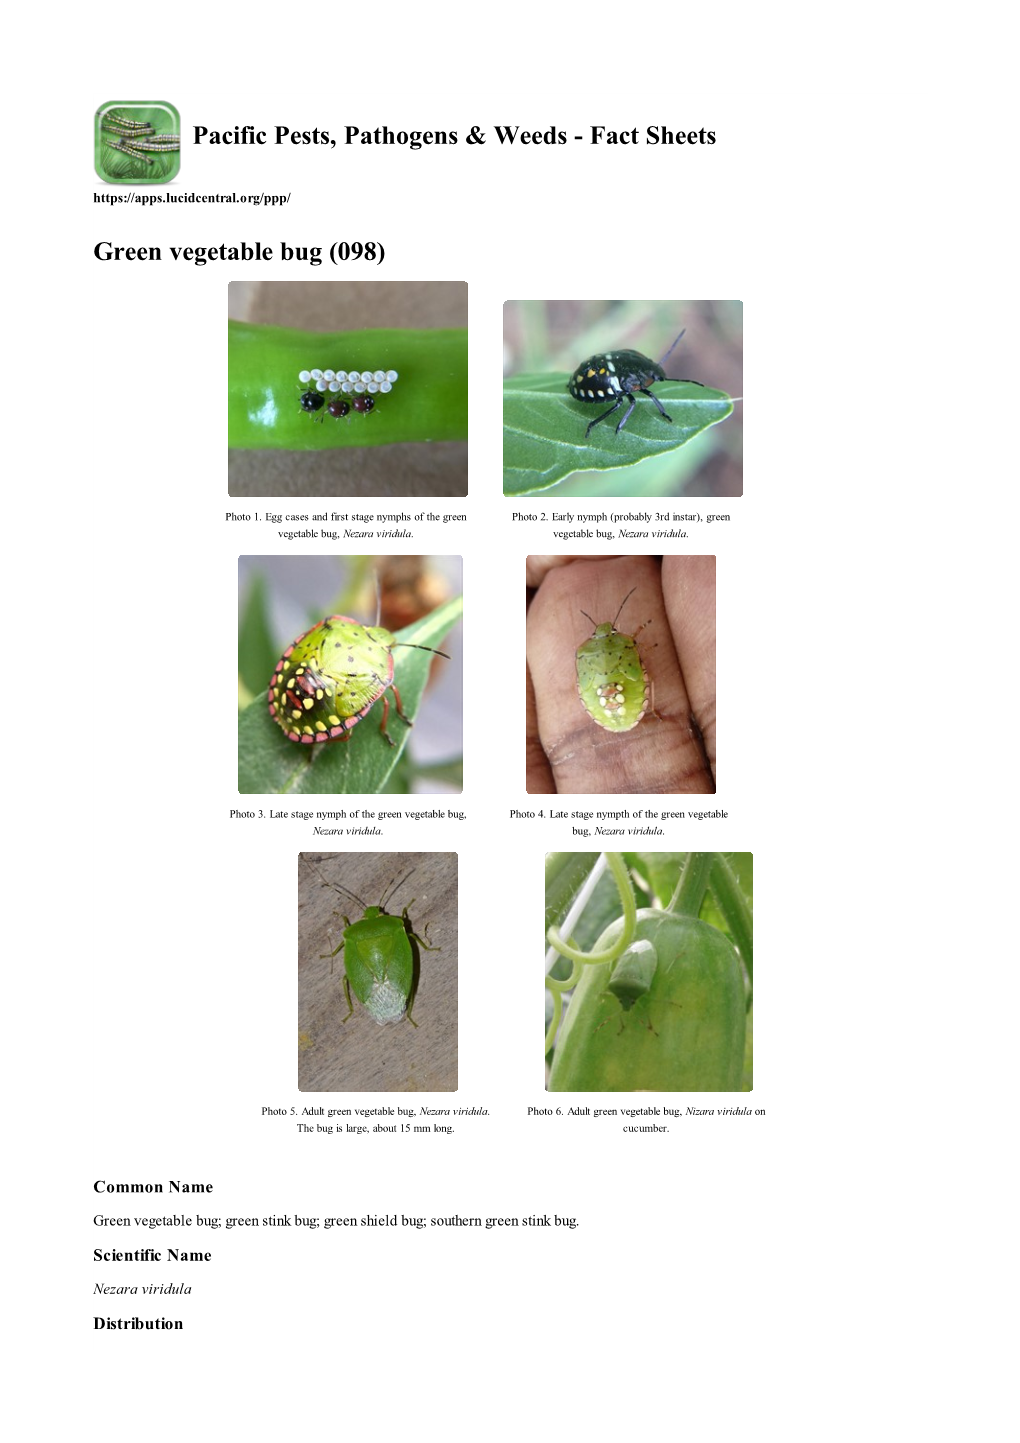 Green Vegetable Bug (098)